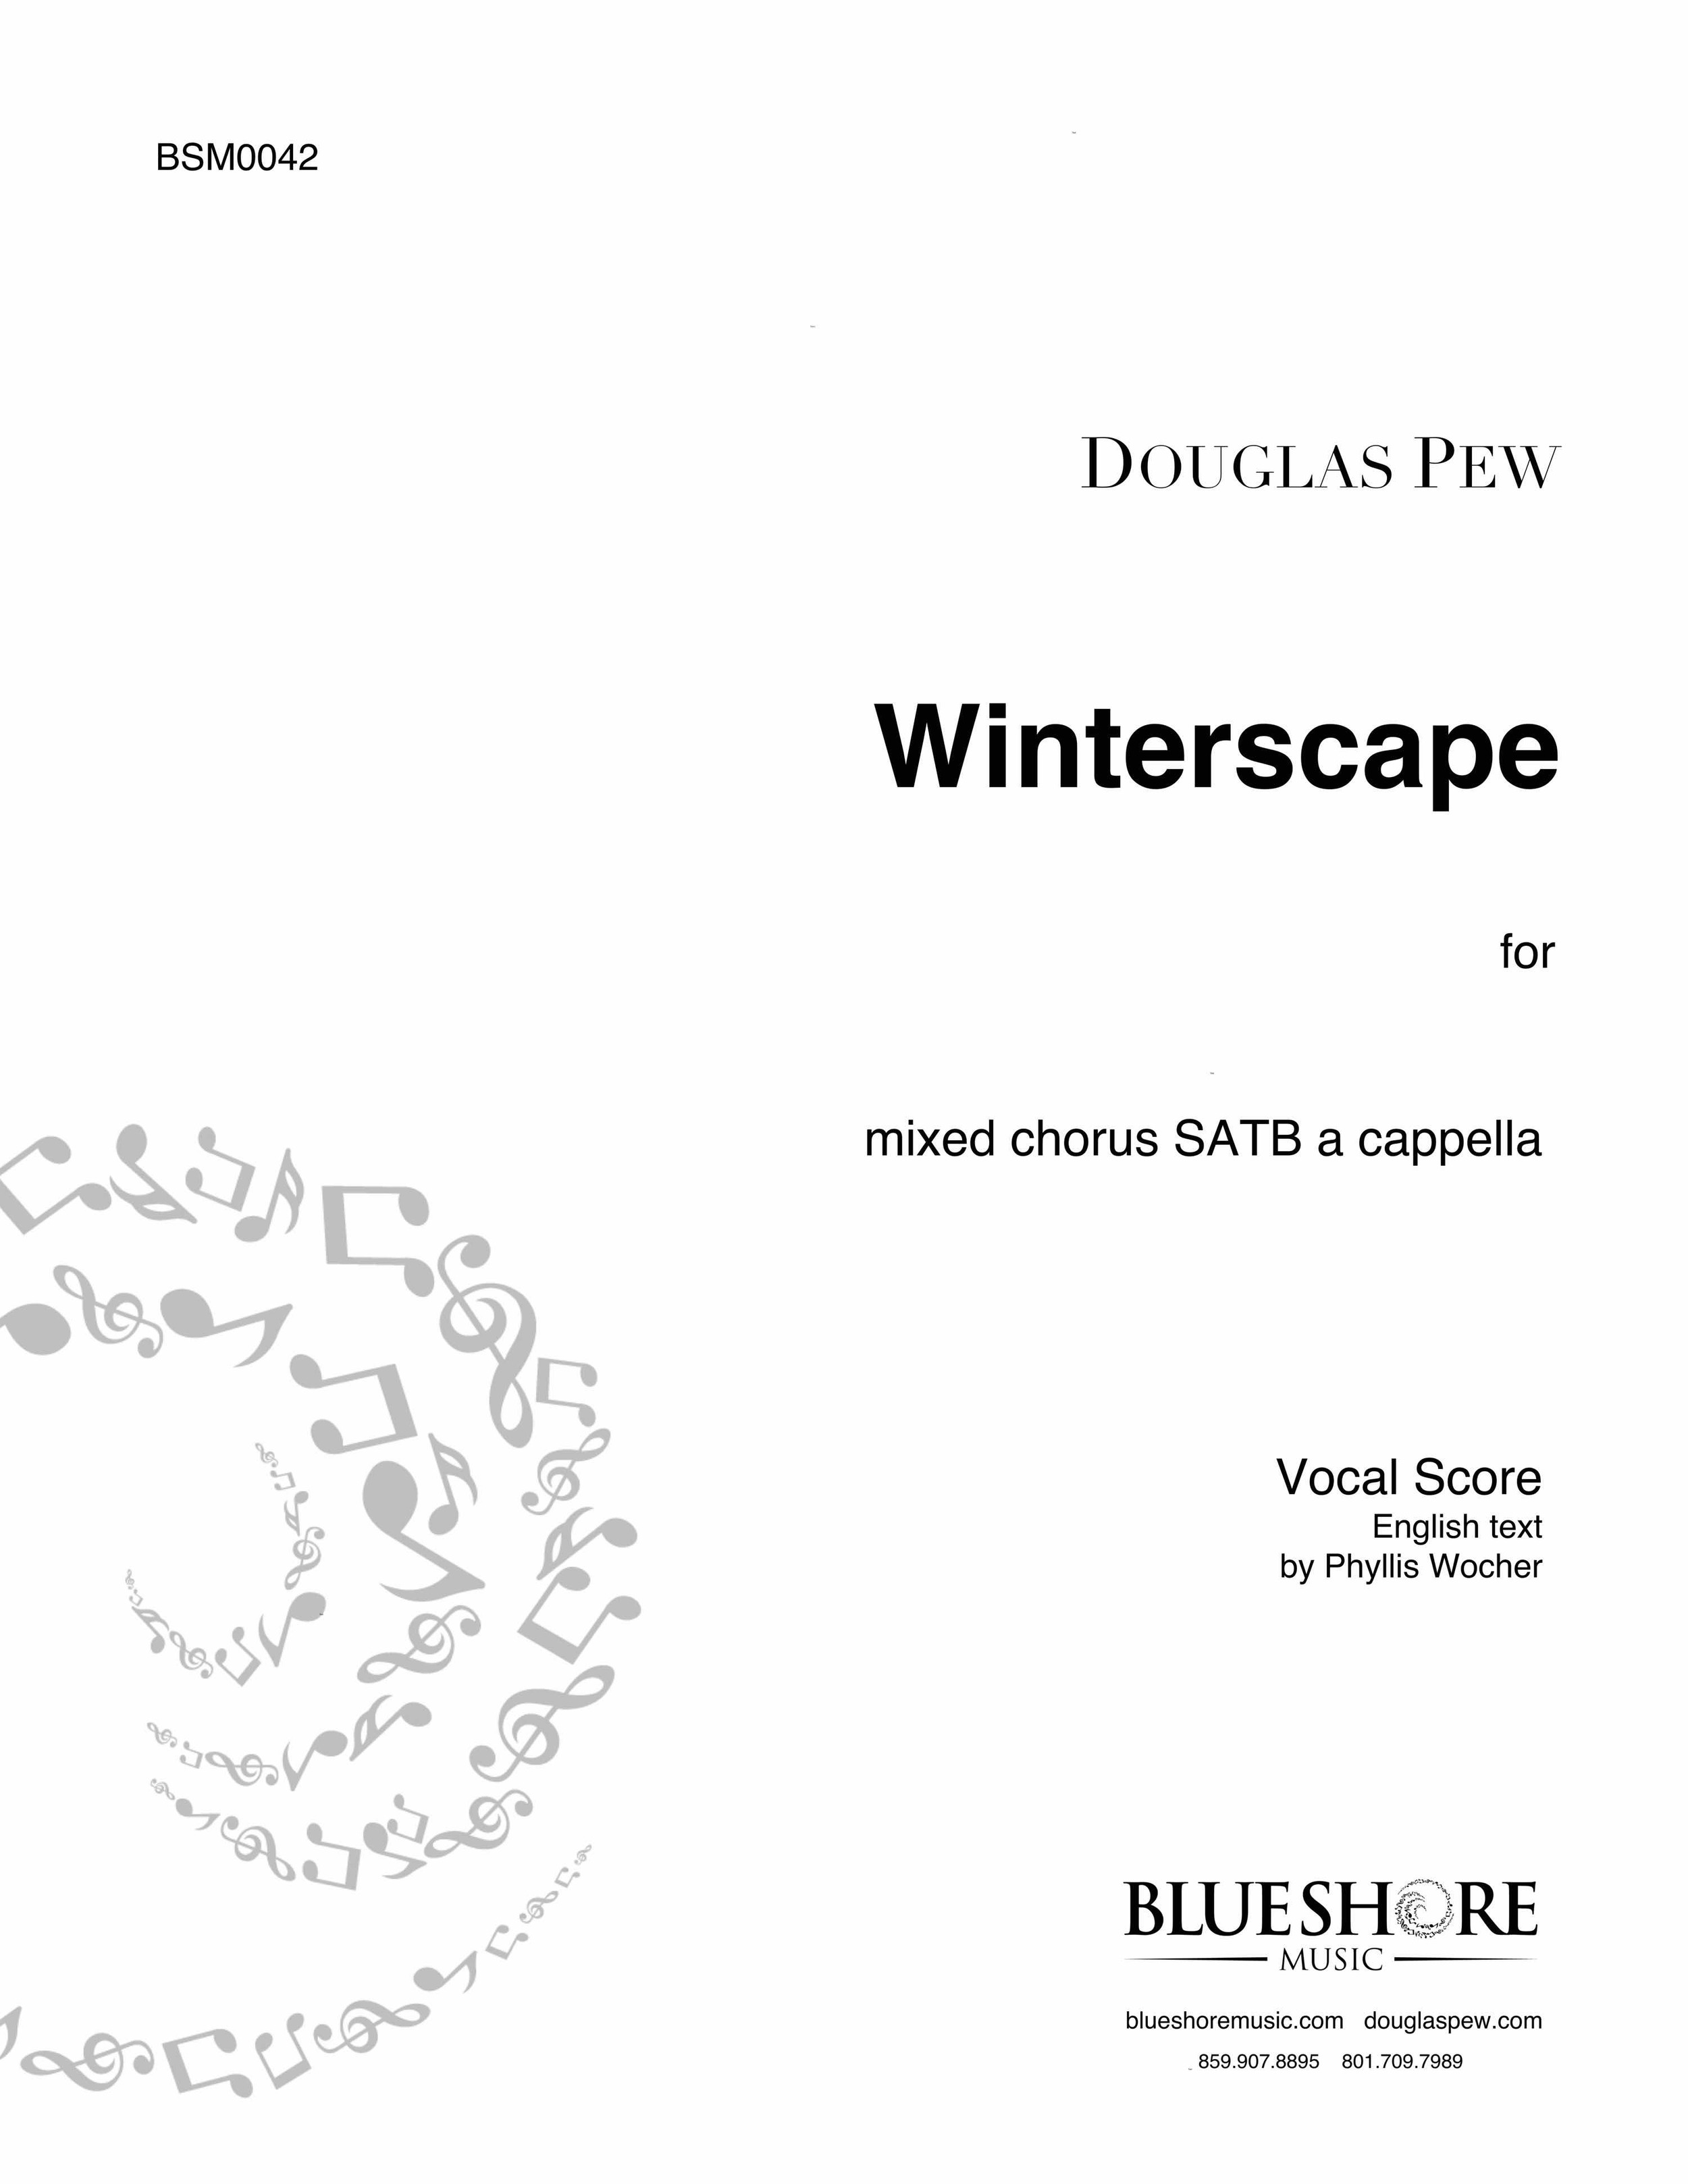 Pew_BSM0042_Winterscape_SATB_cover_smaller.jpg